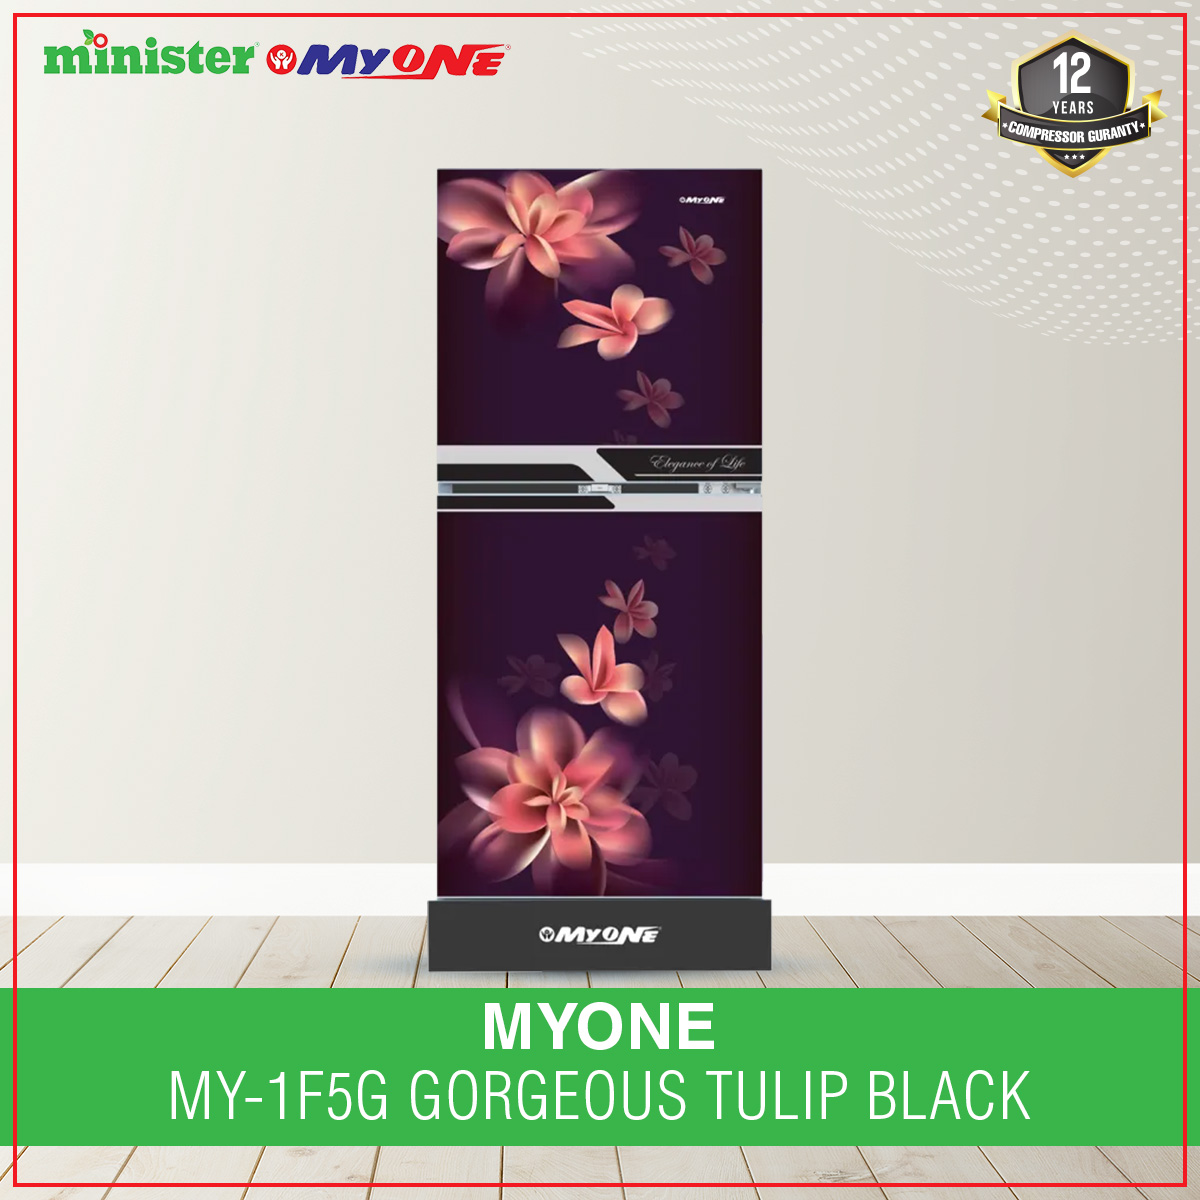 MYONE MY-1F5G GORGEOUS TULIP BLACK MATCH-165 litter